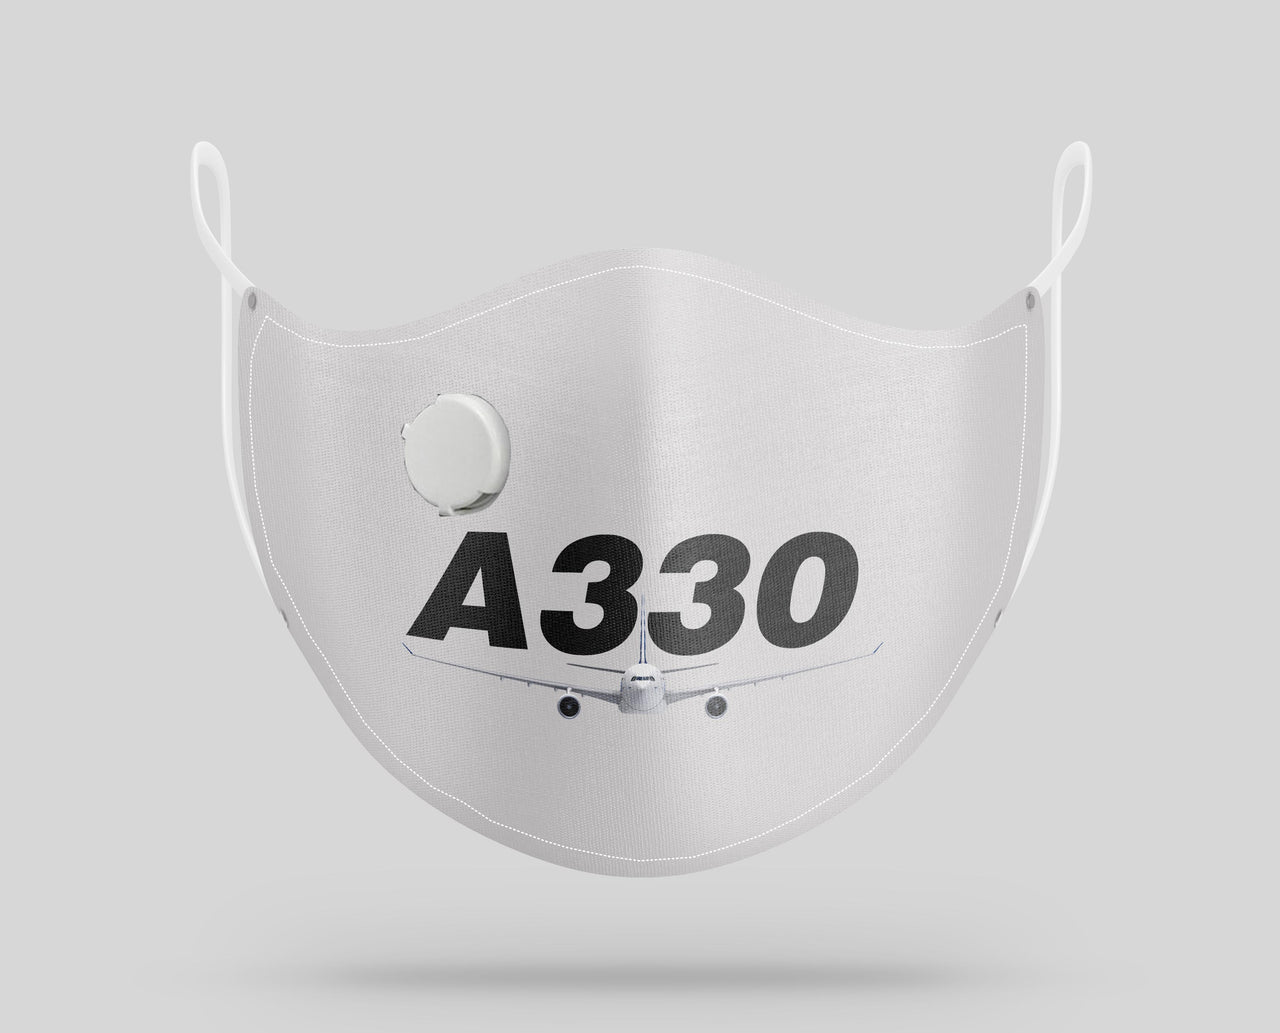 Super Airbus A330 Designed Face Masks